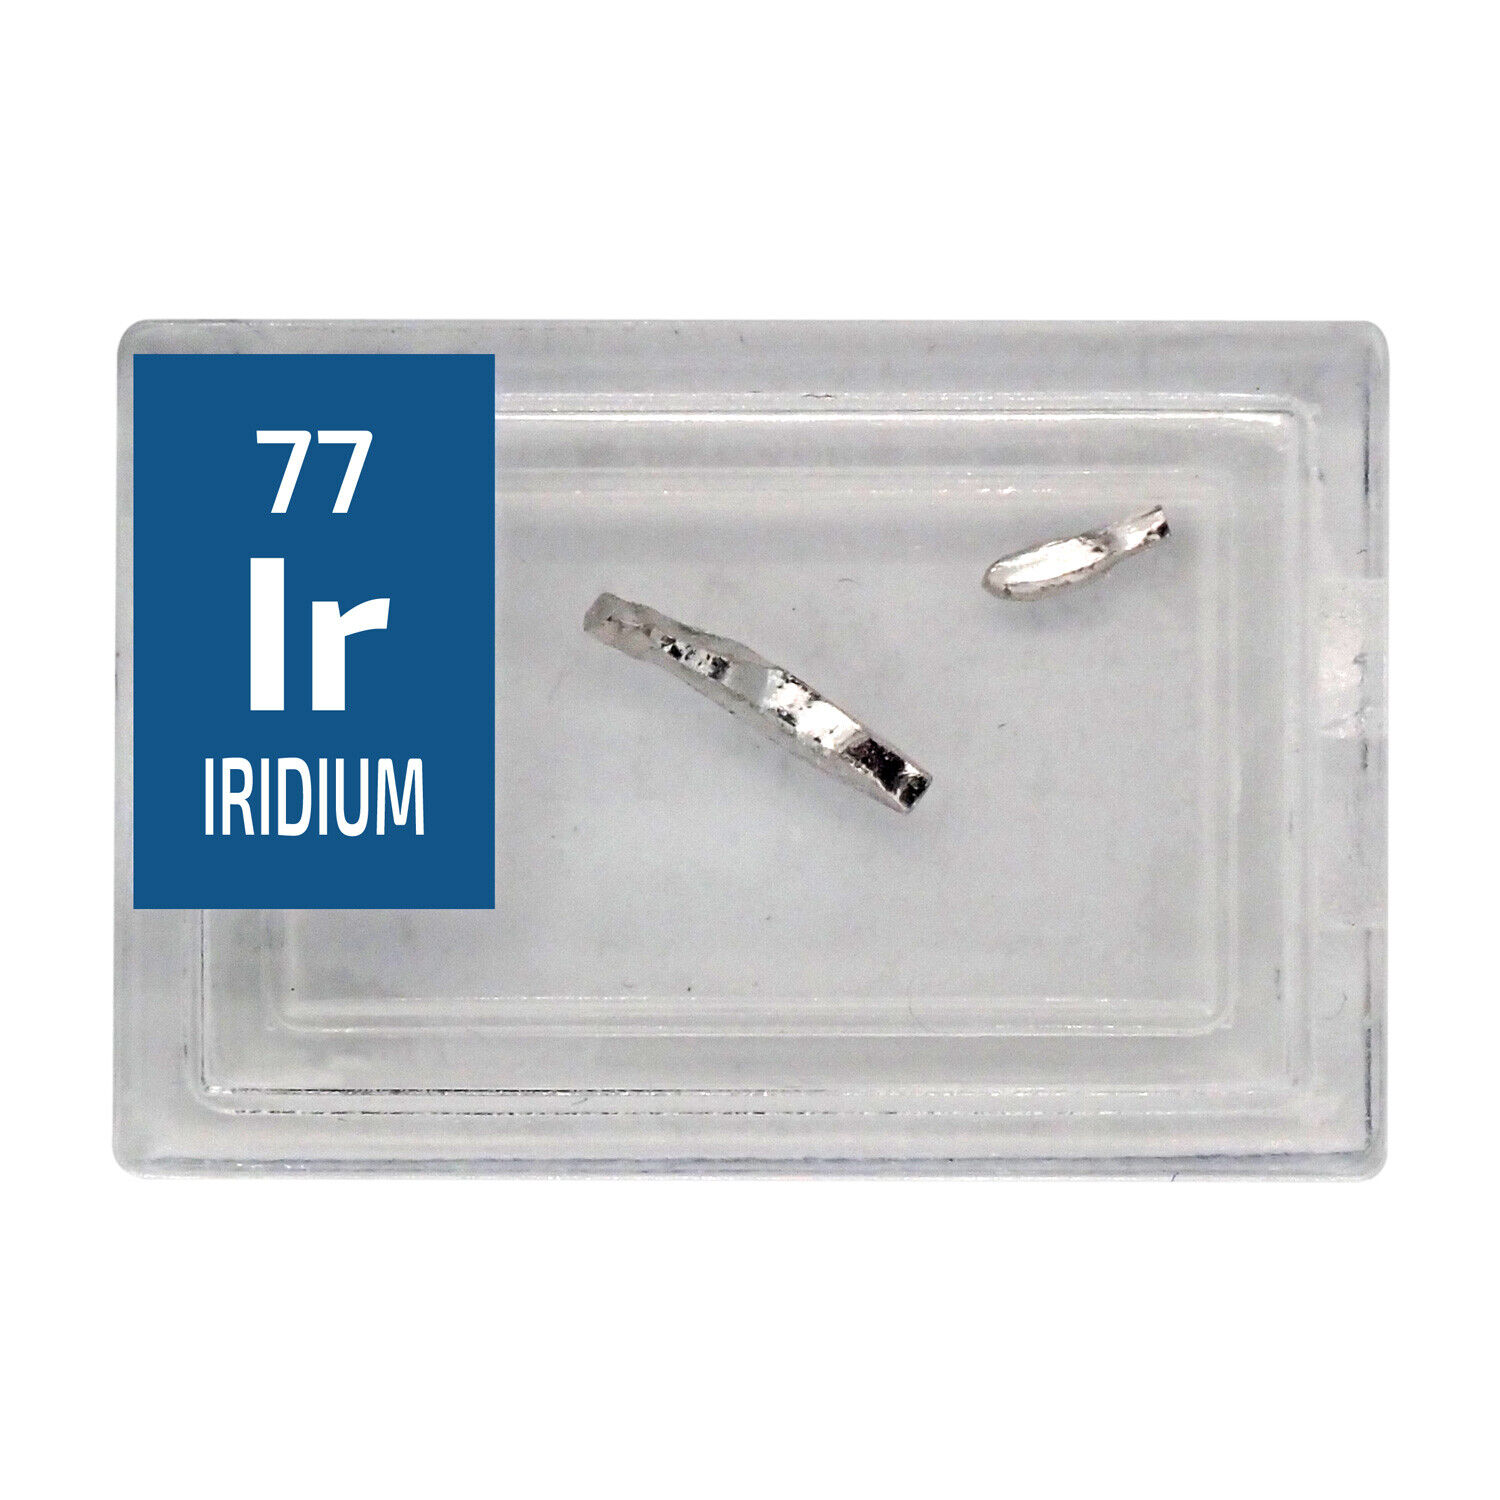 11-facts-about-iridium